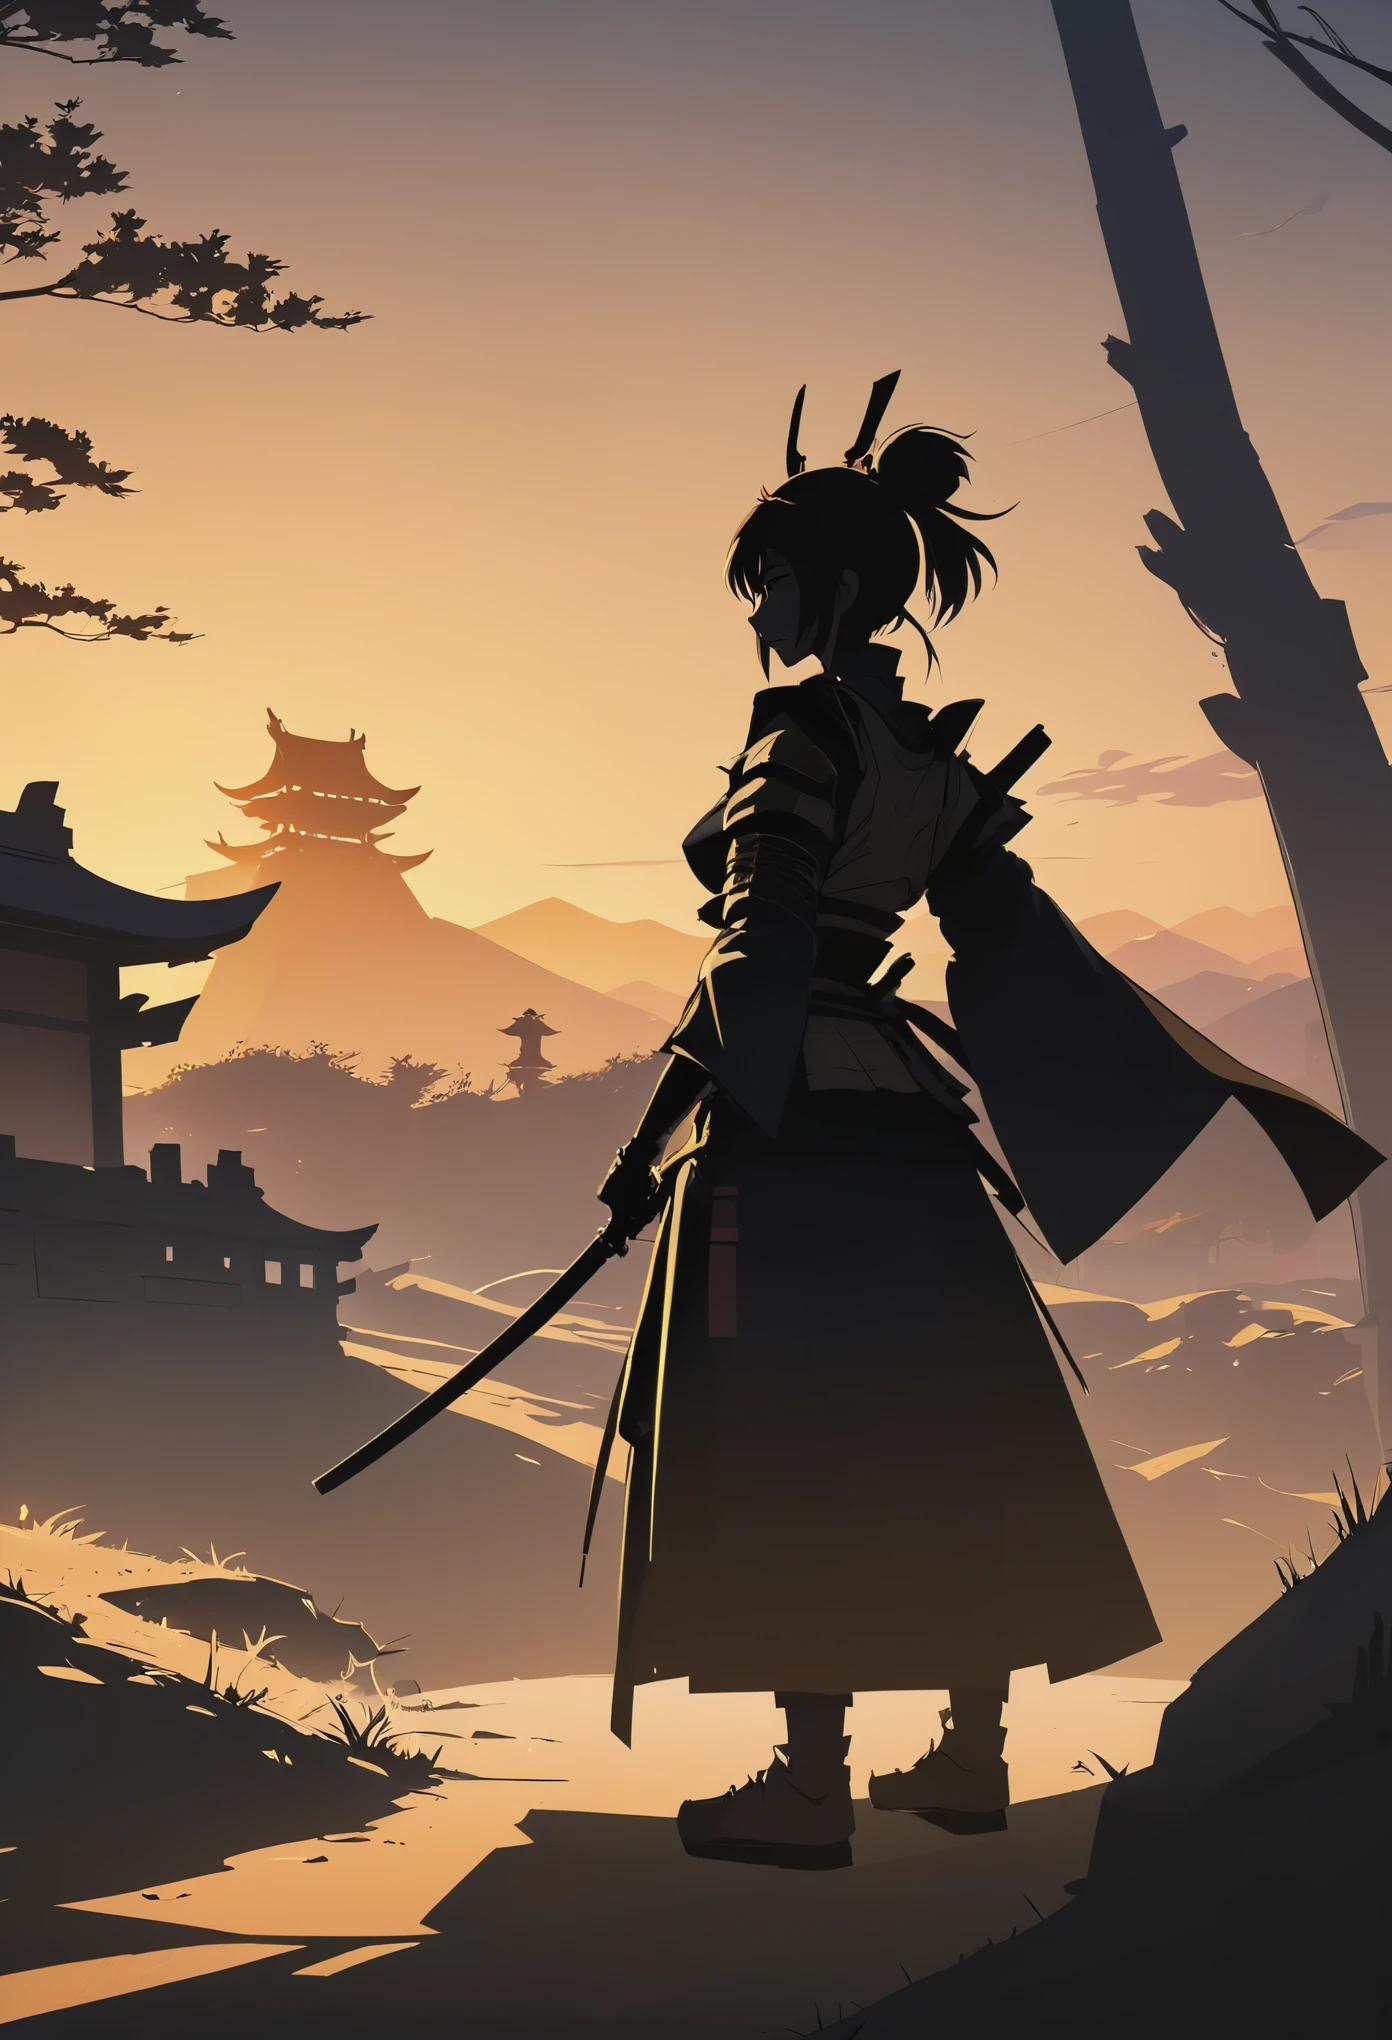 shadow minimalism, anime style, 1samurai, woman, beautiful, golden hour, scenery, in a old battlefield